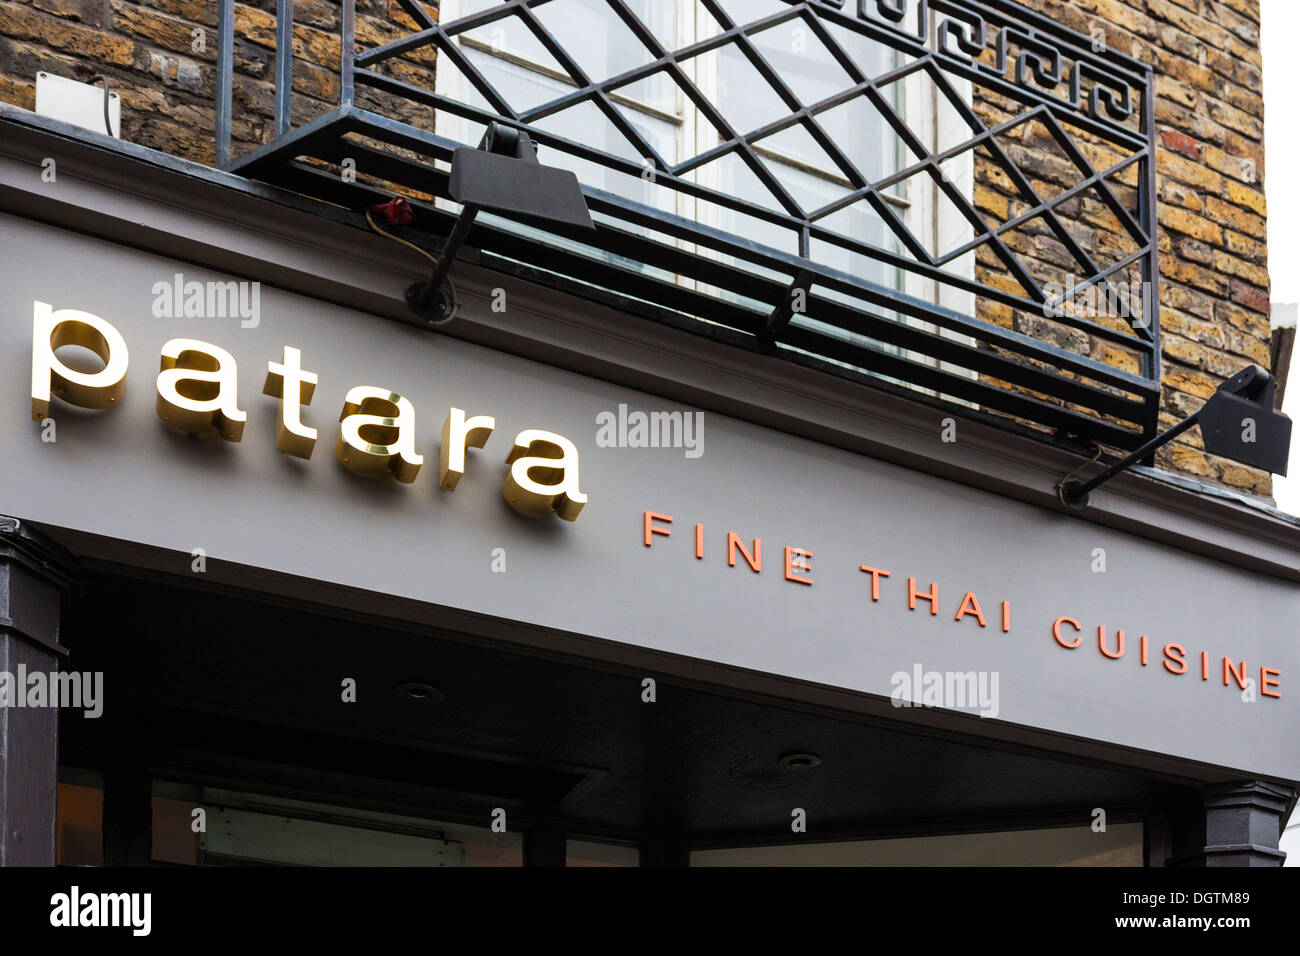 Patara restaurant sign, Fulham Road, Londra Foto Stock